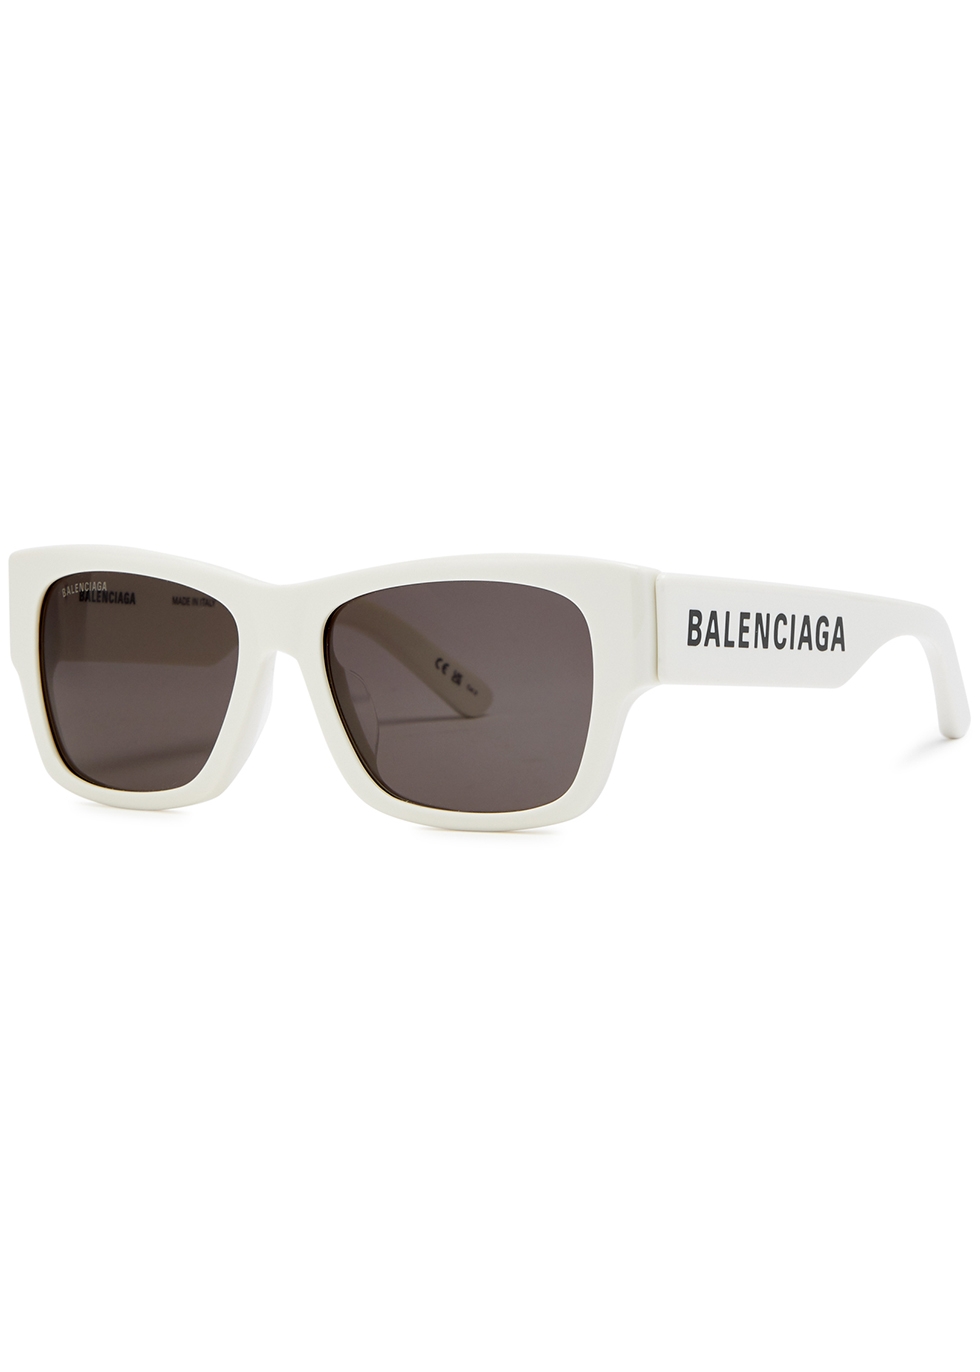 Balenciaga Wayfarer Snake print sunglasses Unisex  Printed sunglasses  Balenciaga Sunglasses accessories